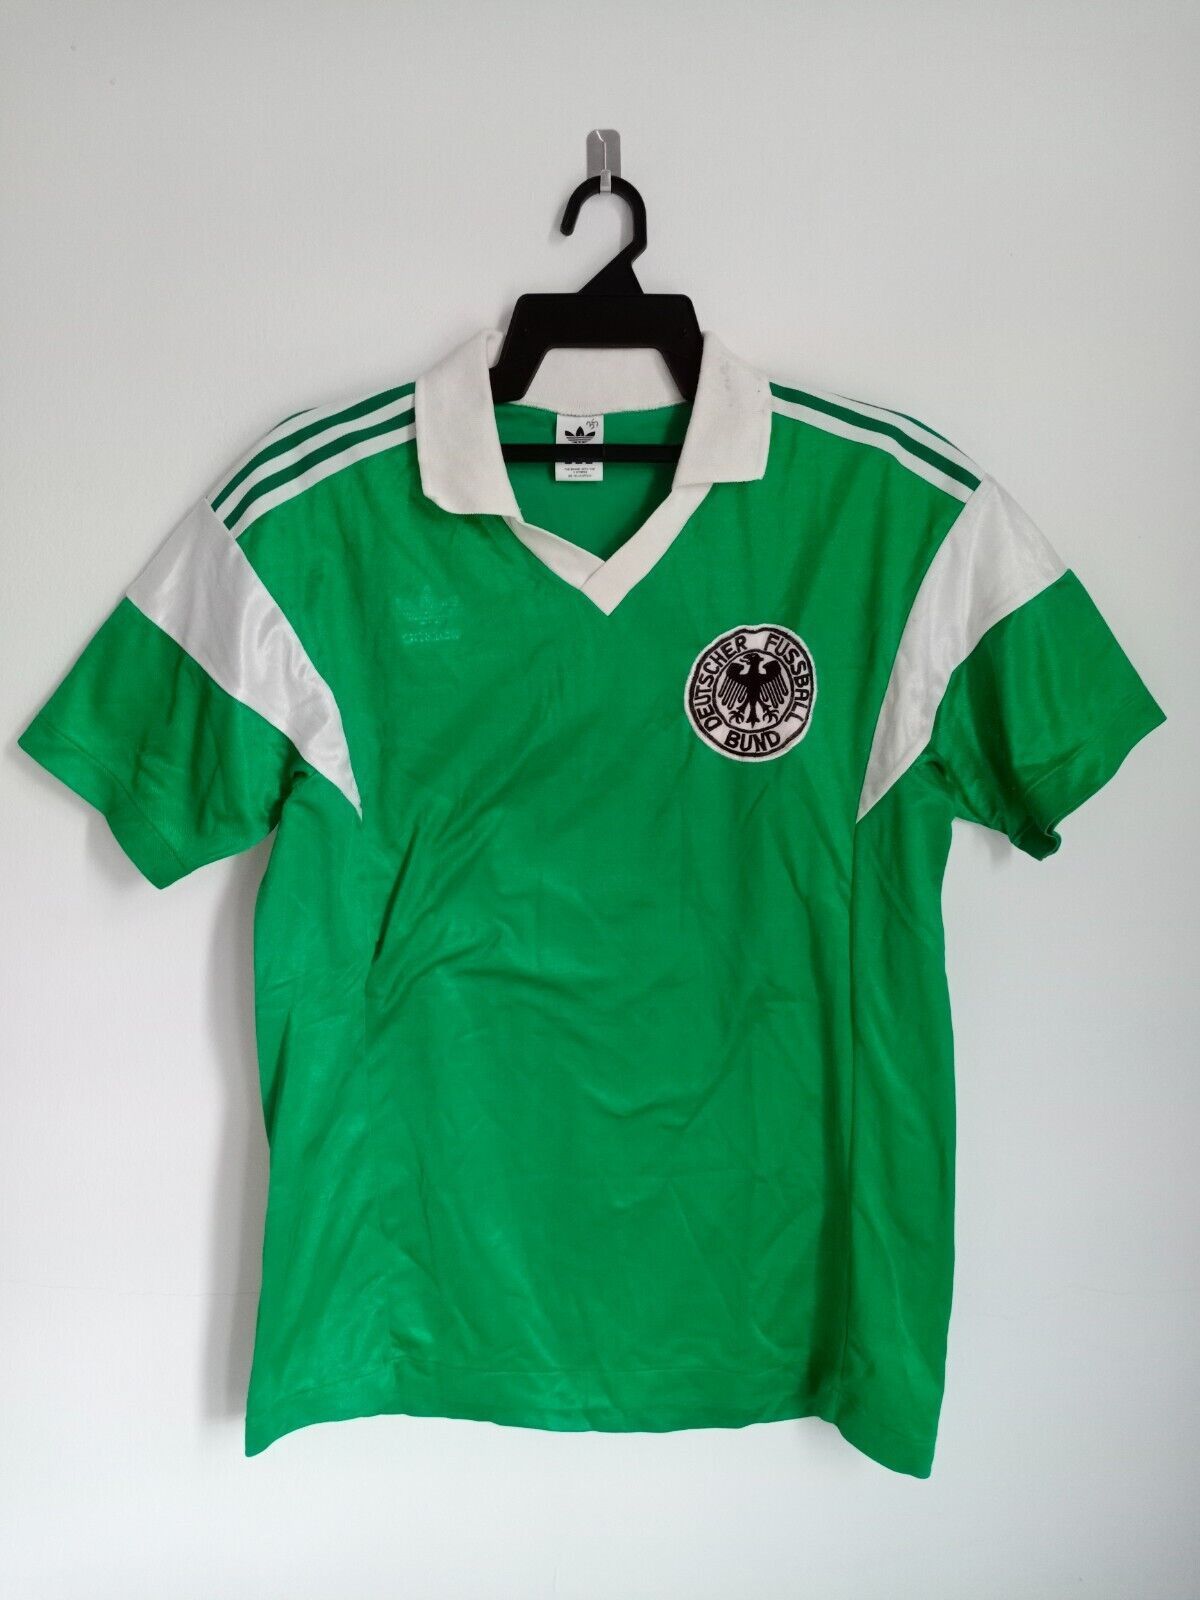 Adidas Vintage 80s Adidas Football Germany 80 82 Deutscher Fussball Size US M / EU 48-50 / 2 - 1 Preview